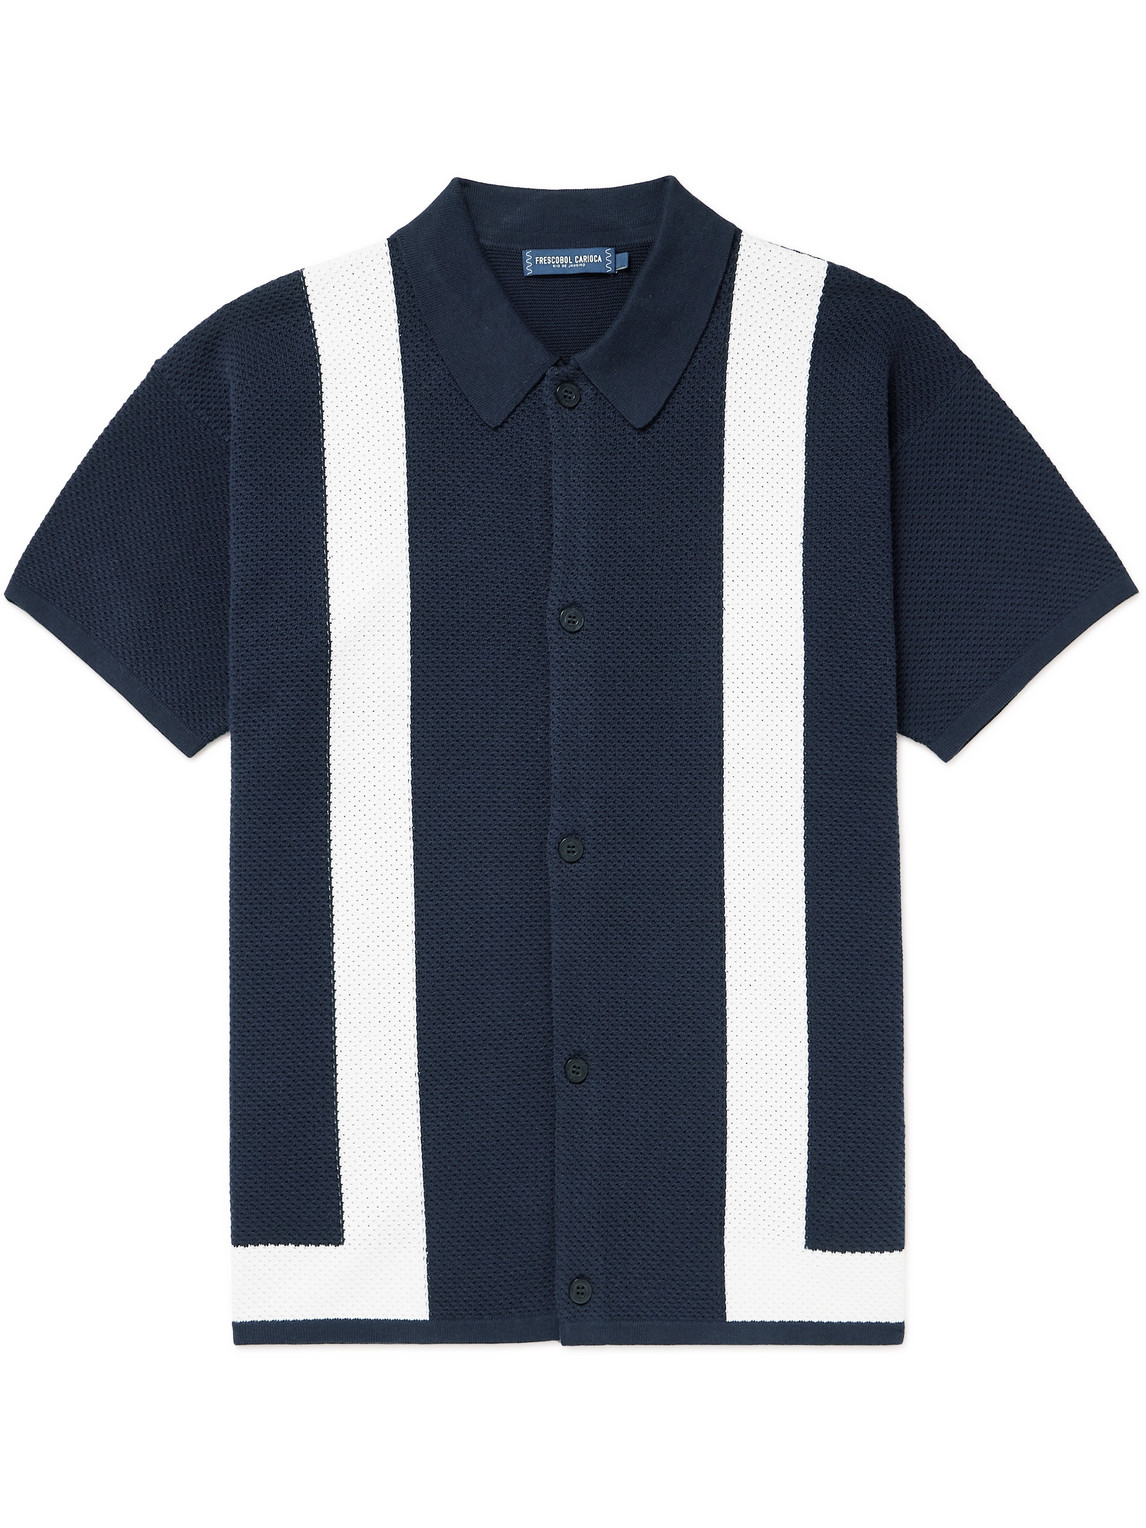 Frescobol Carioca - Barretos Striped Knitted Cotton Shirt - Men - Blue - S von Frescobol Carioca